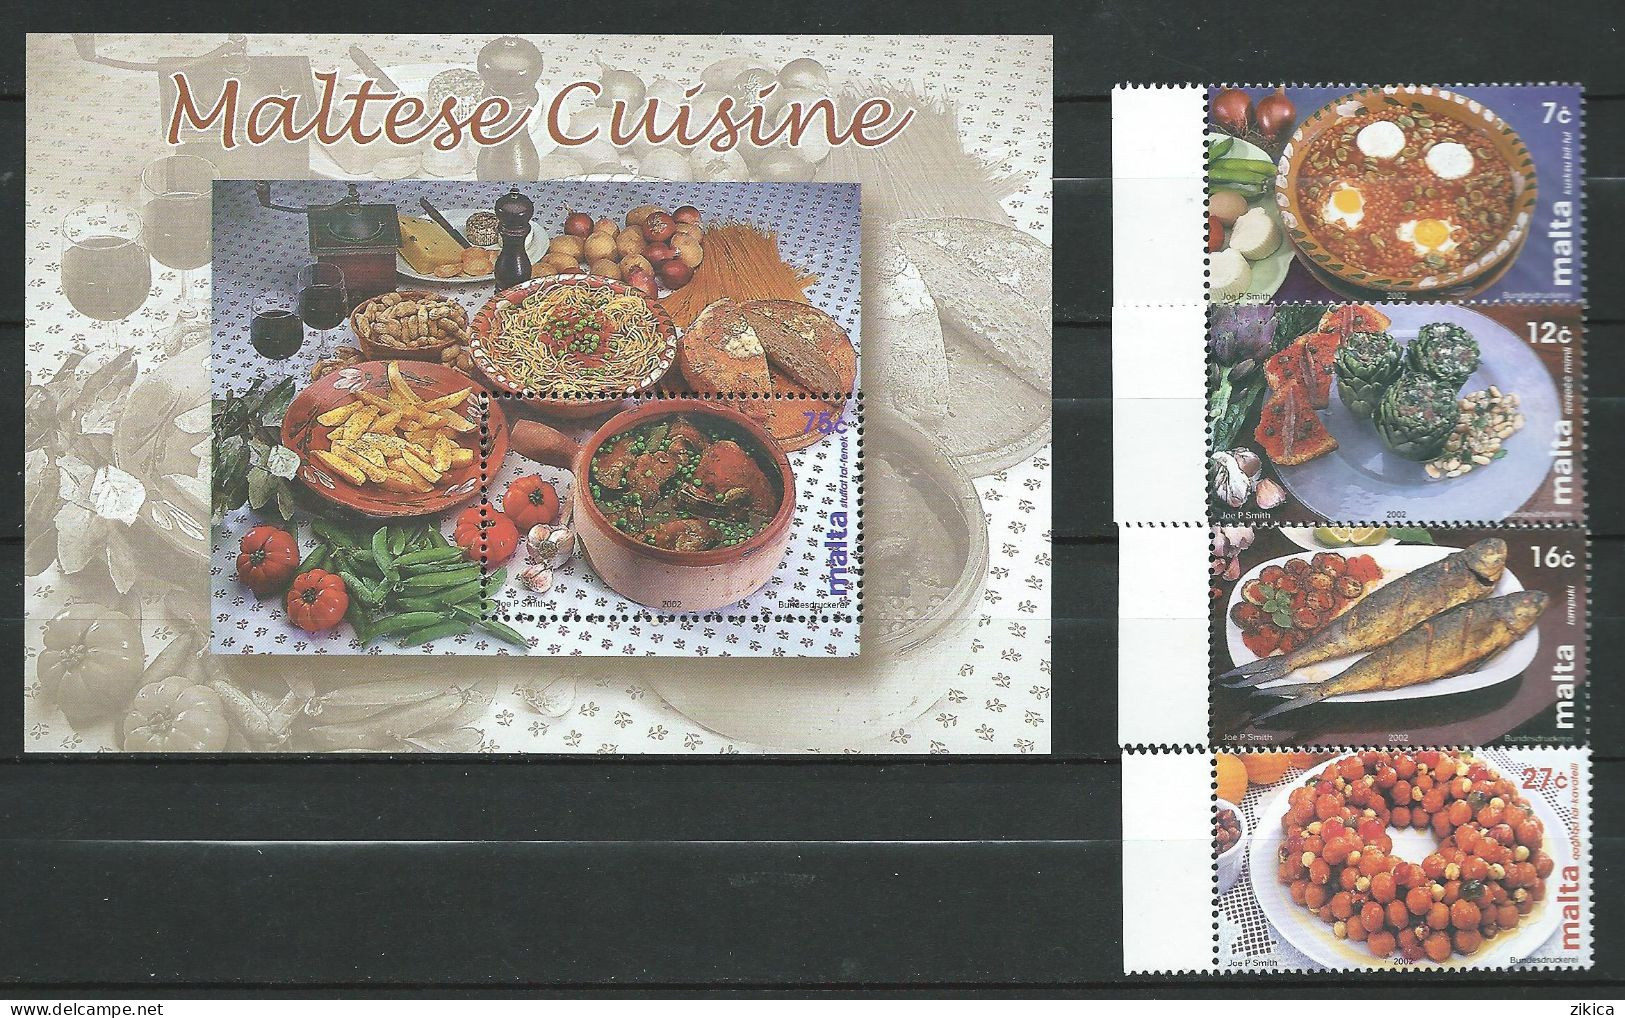 Malta - 2002 Maltese Cuisine.S/S And Stamps.food  MNH** - Malta